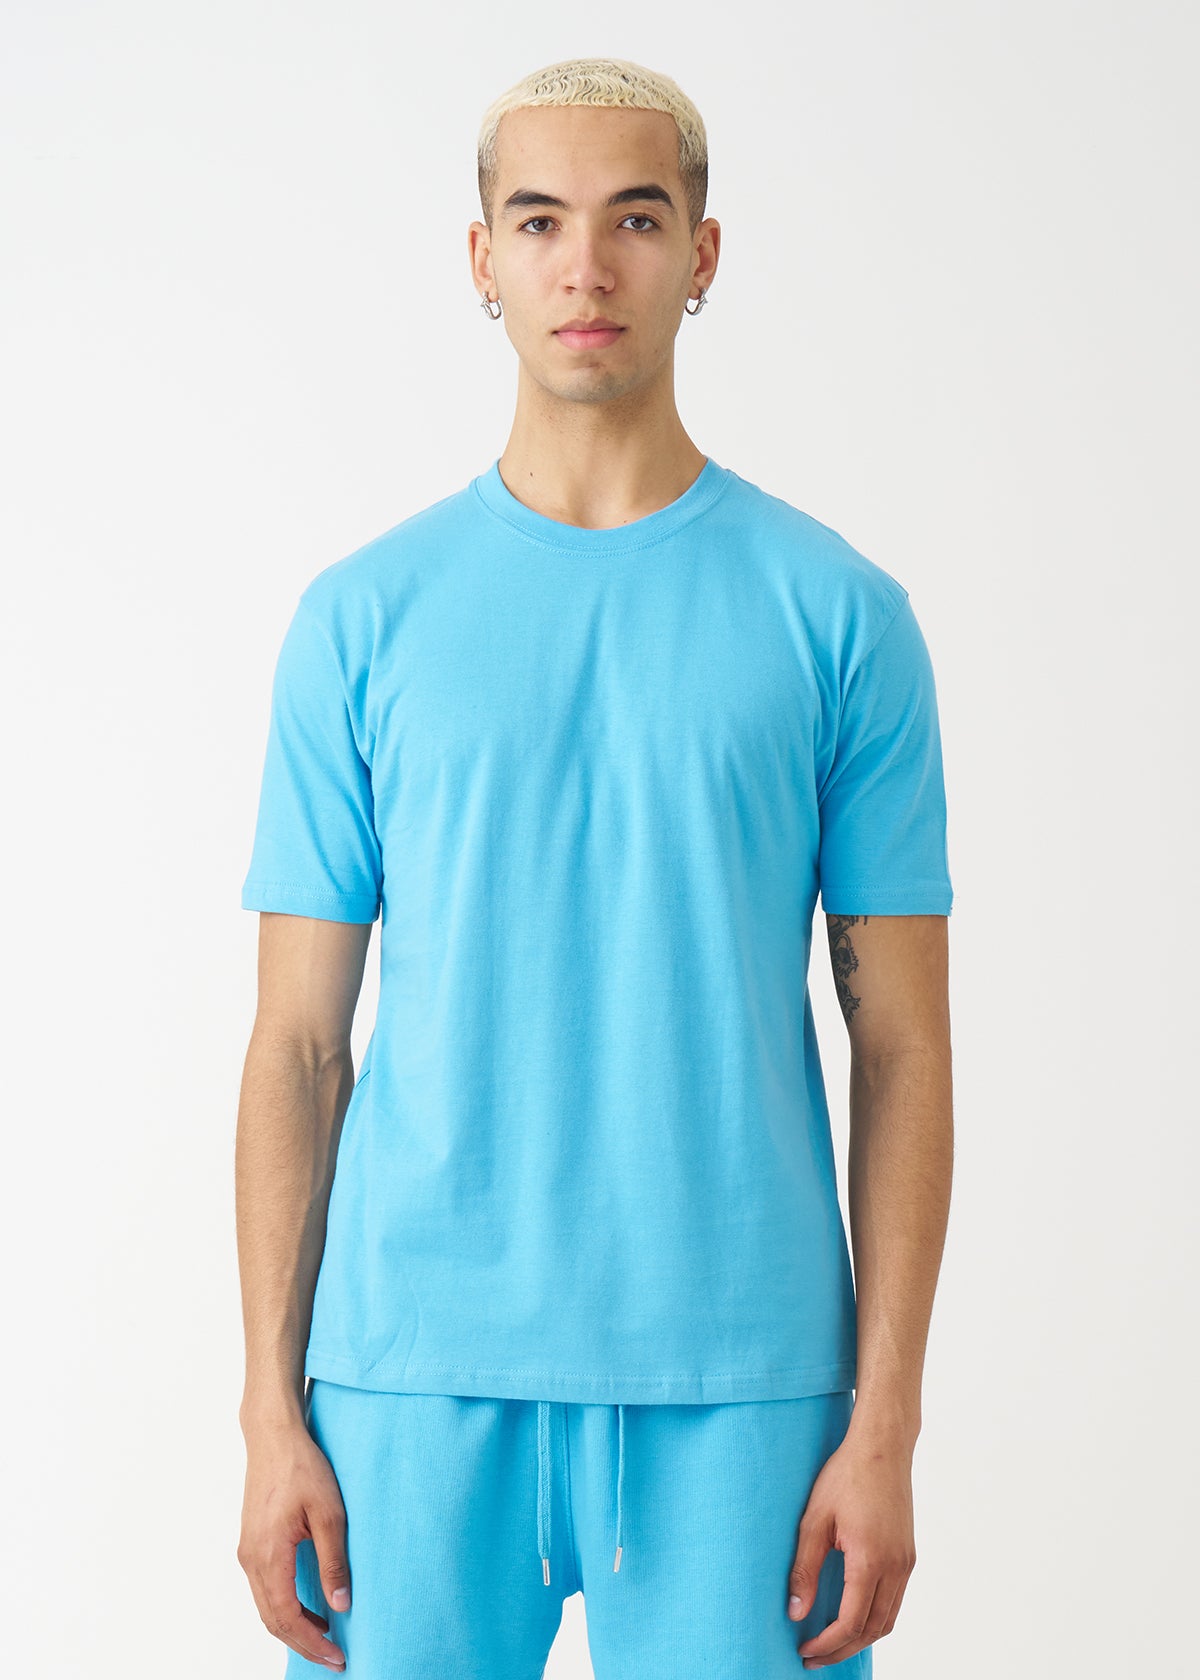 Sky Blue Combed Cotton T-Shirt